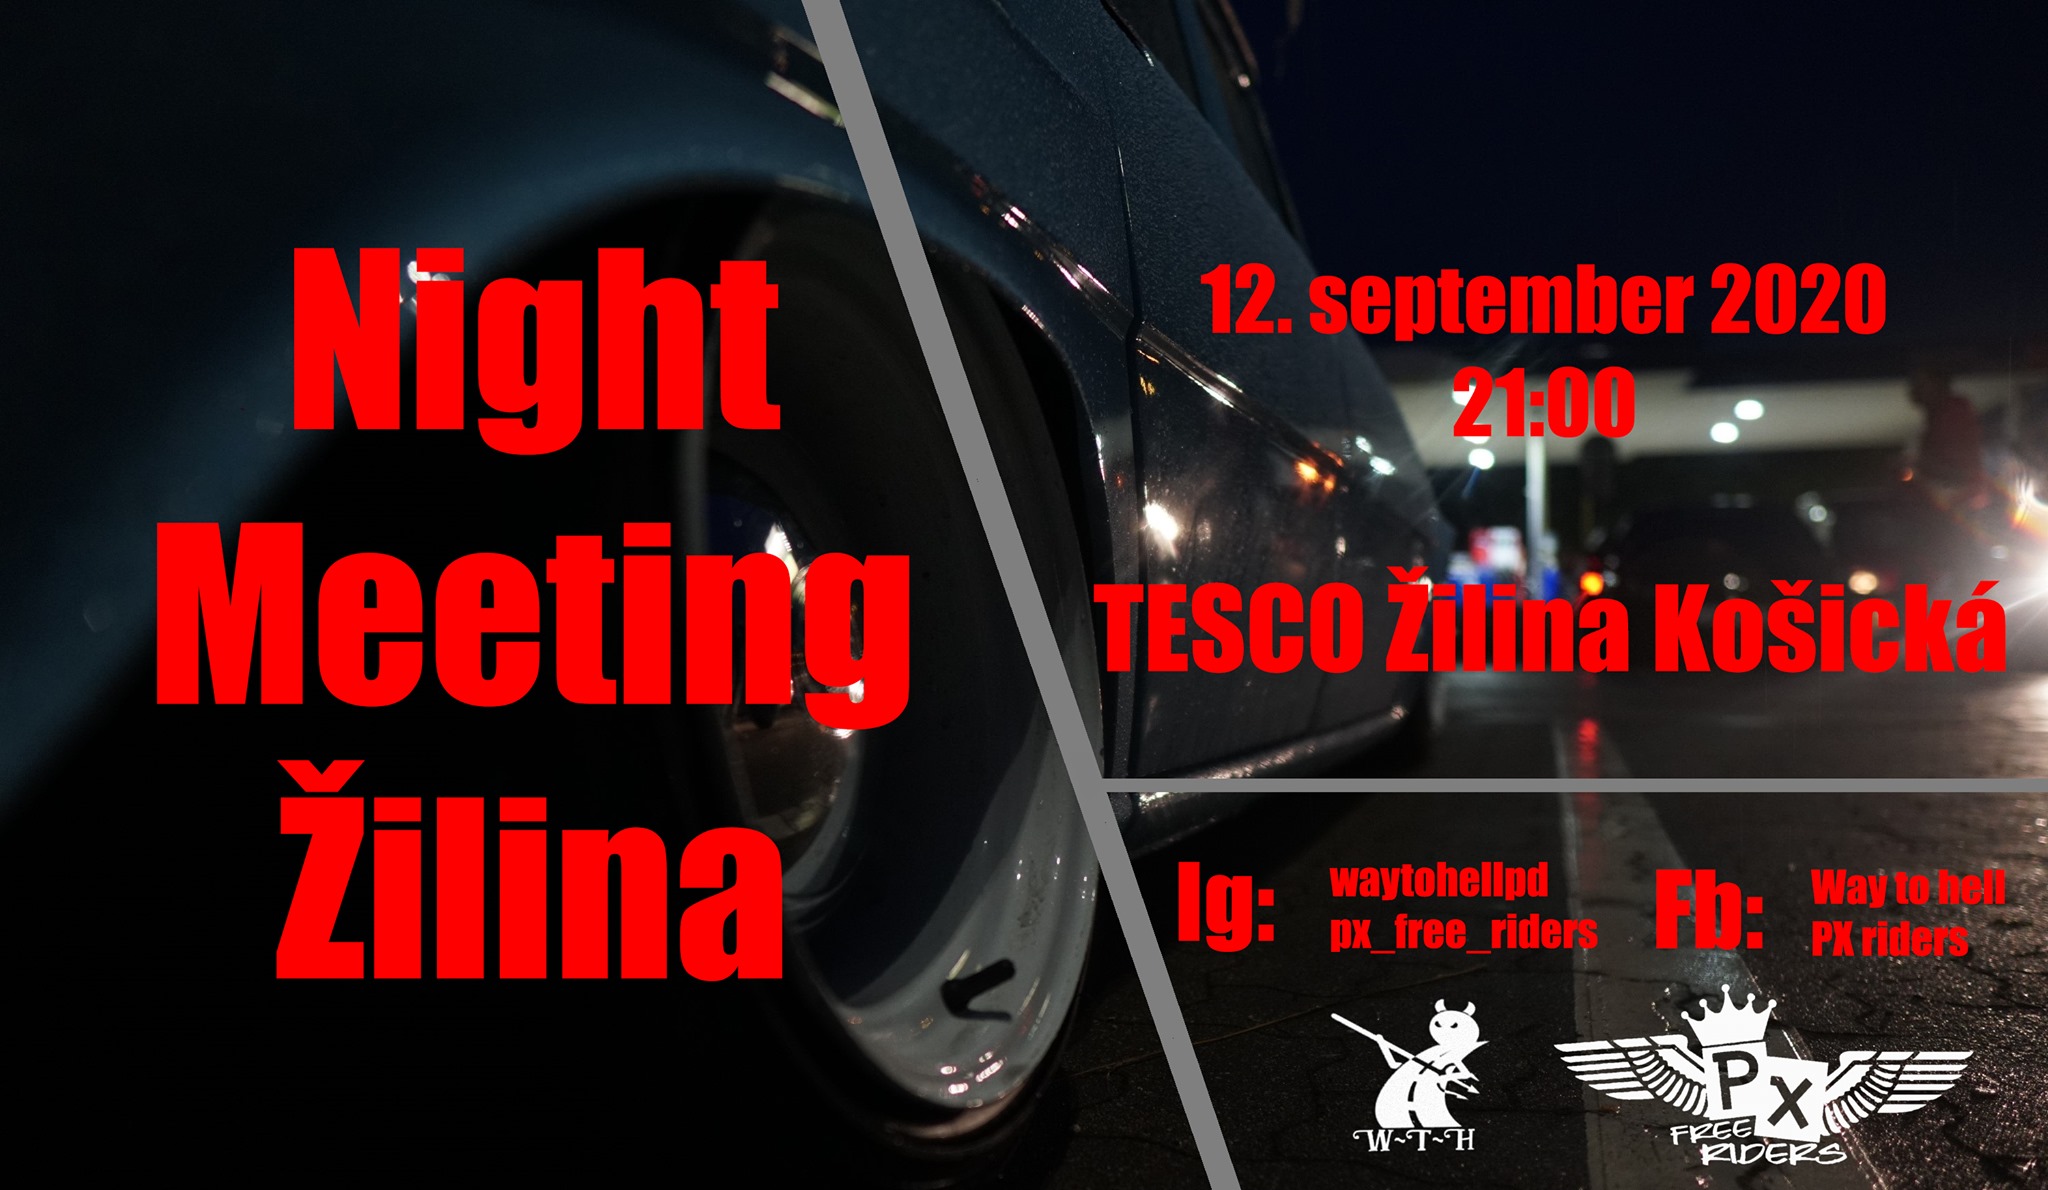 Night Meeting Žilina ( Way to hell, PX riders )